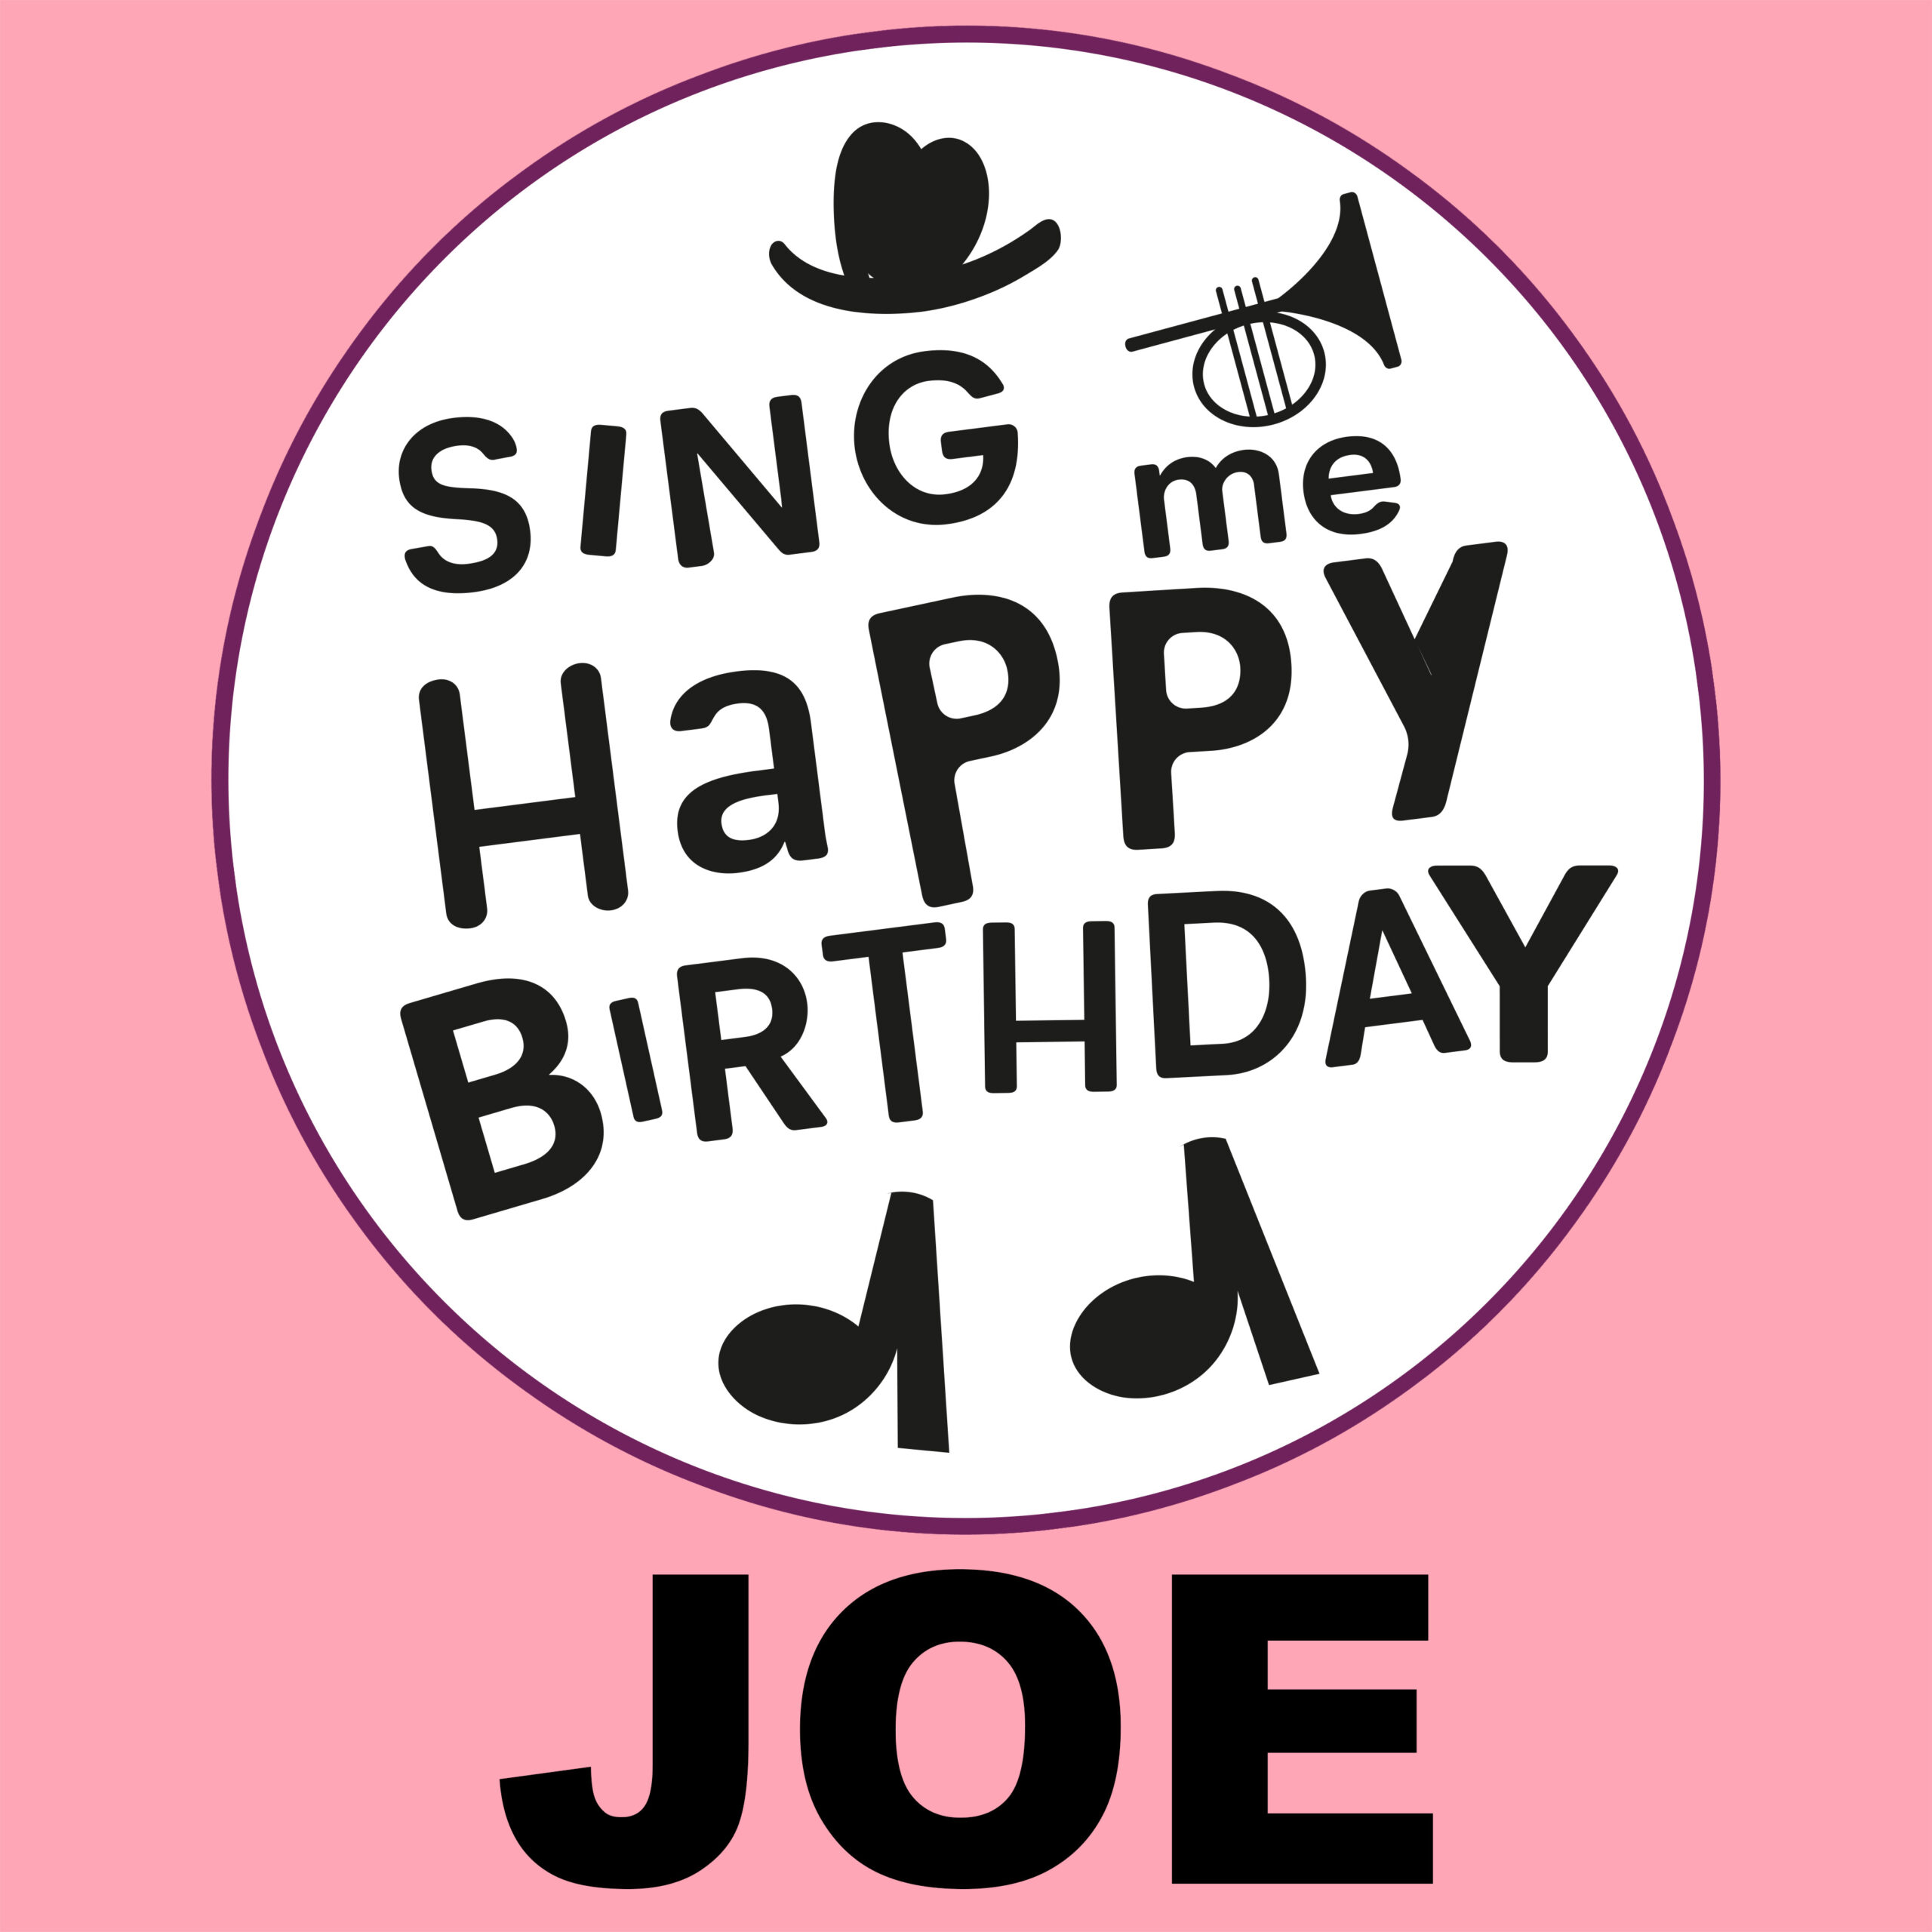 Happy Birthday Joe ⋆ Birthday Songs ⋆ Sing Me Happy Birthday